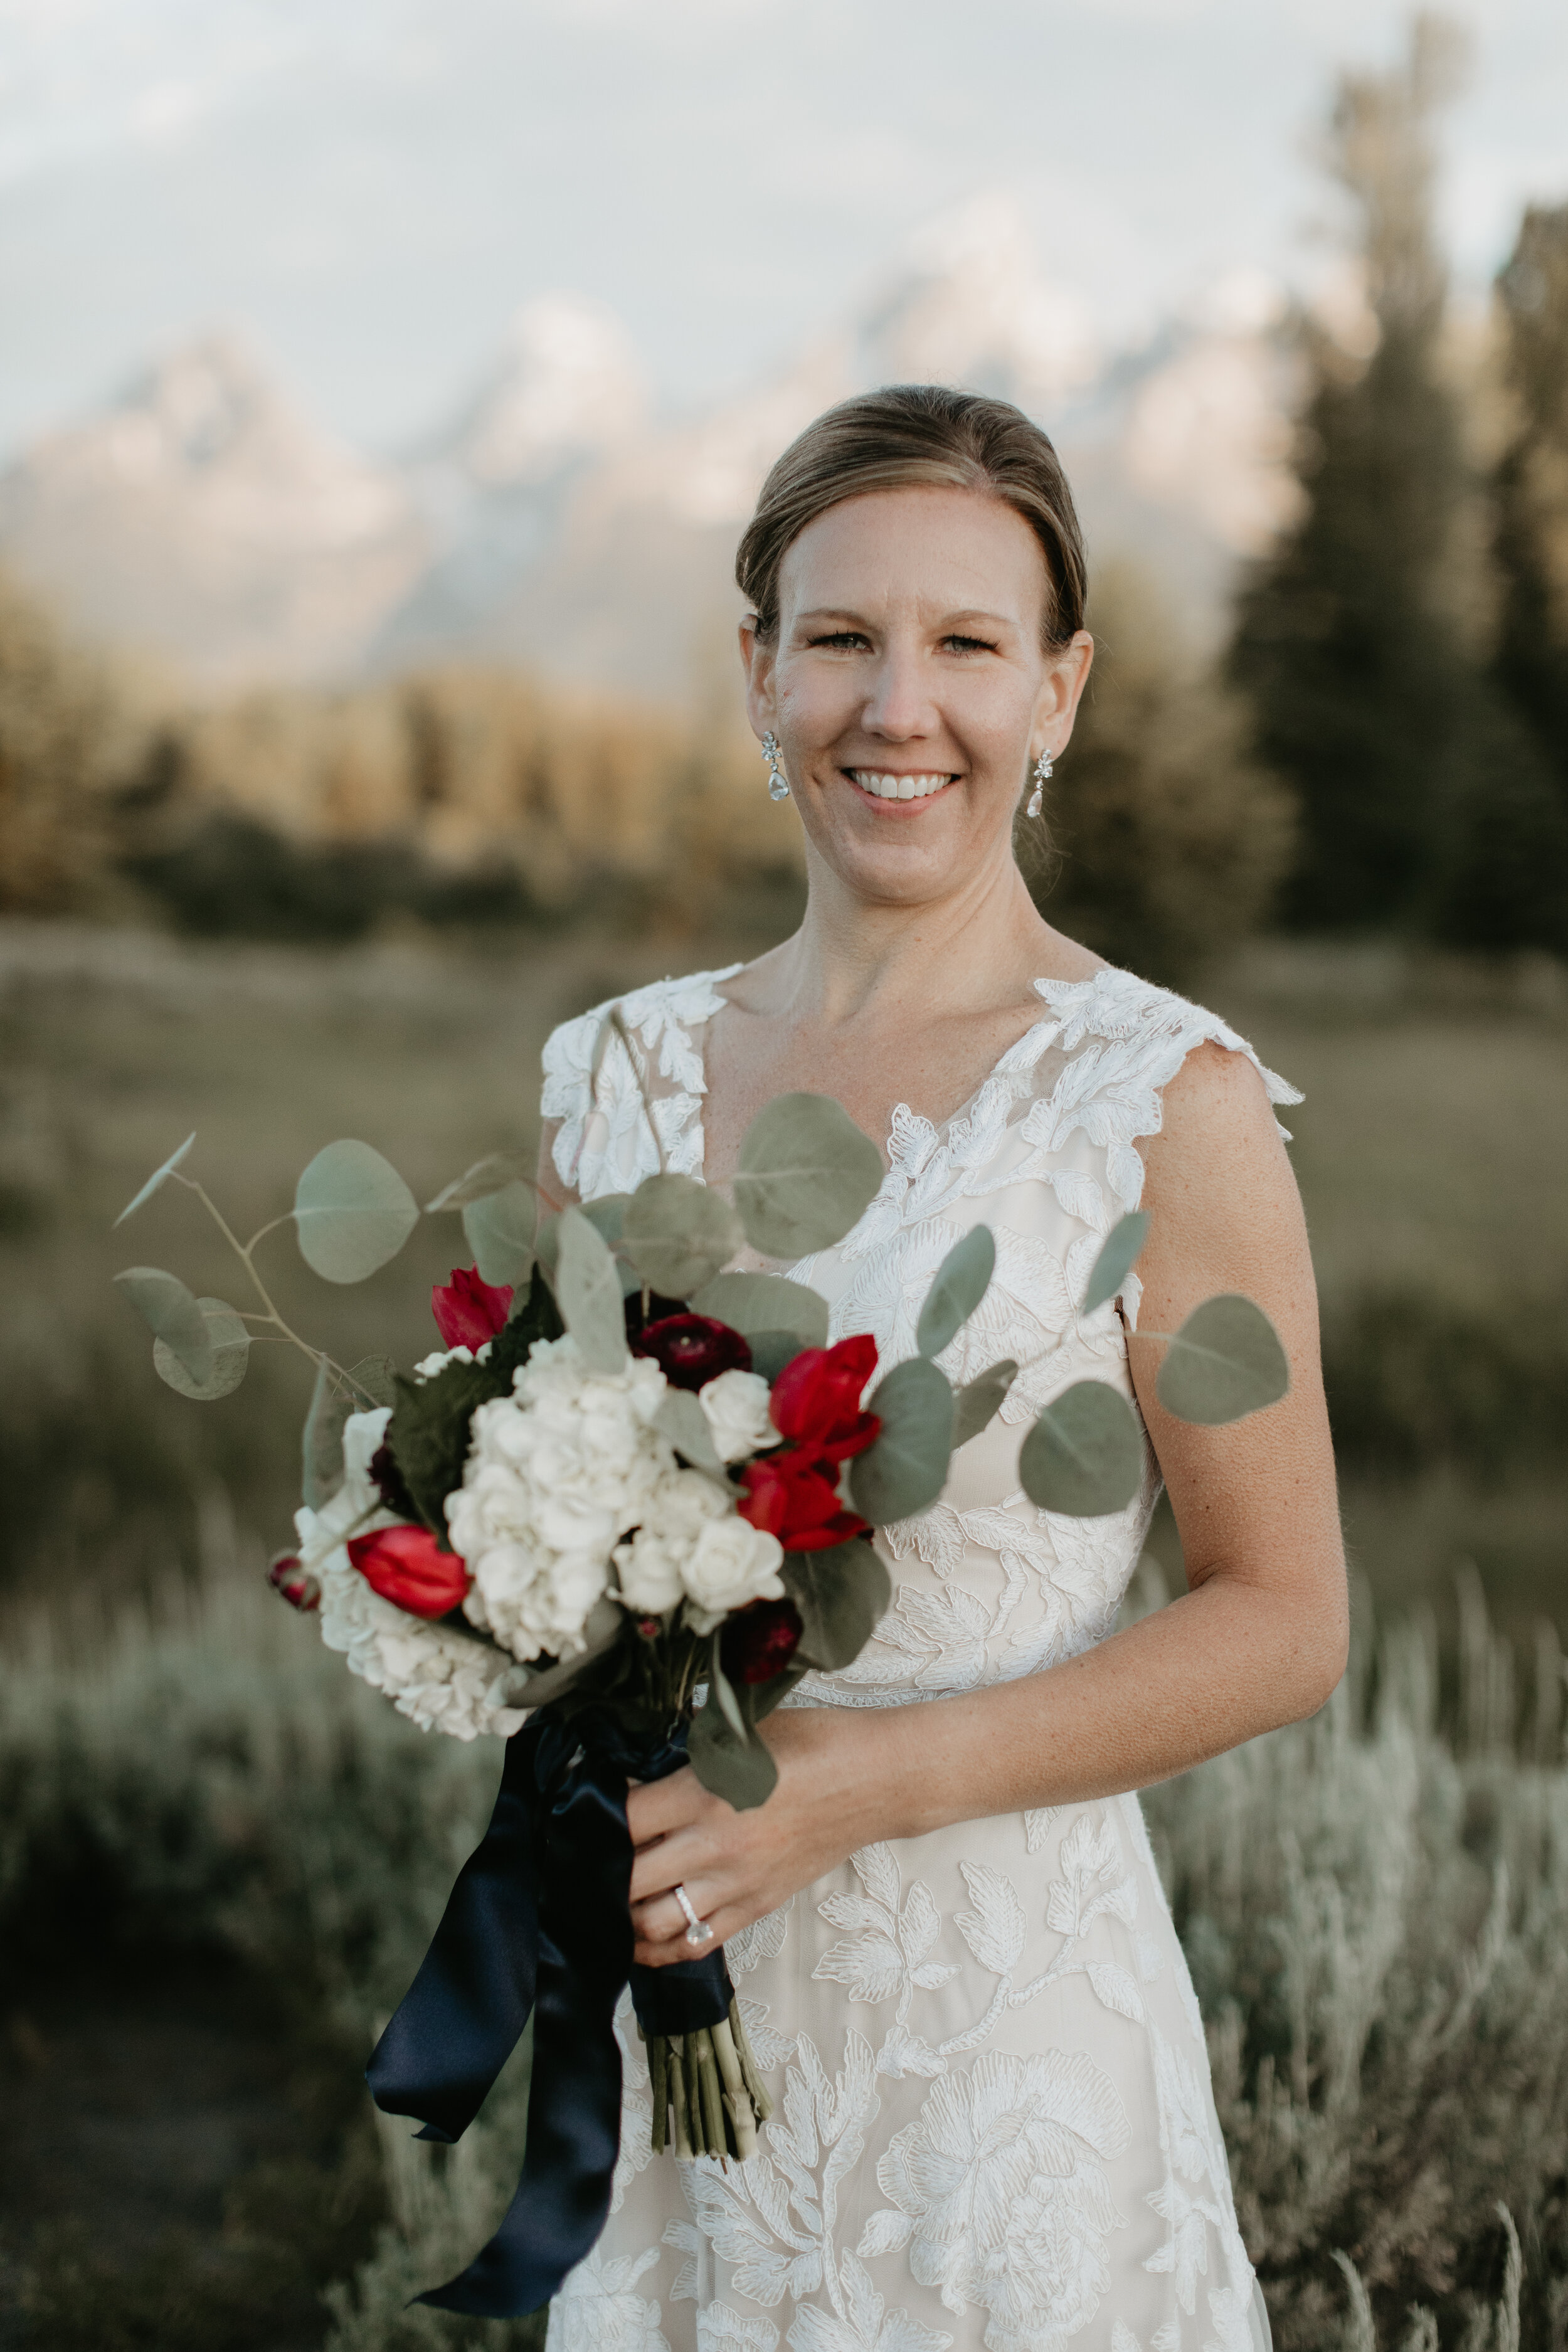 Nicole-Daacke-Photography-bride-wedding-bouquet-grand-tetonsjpg.jpg